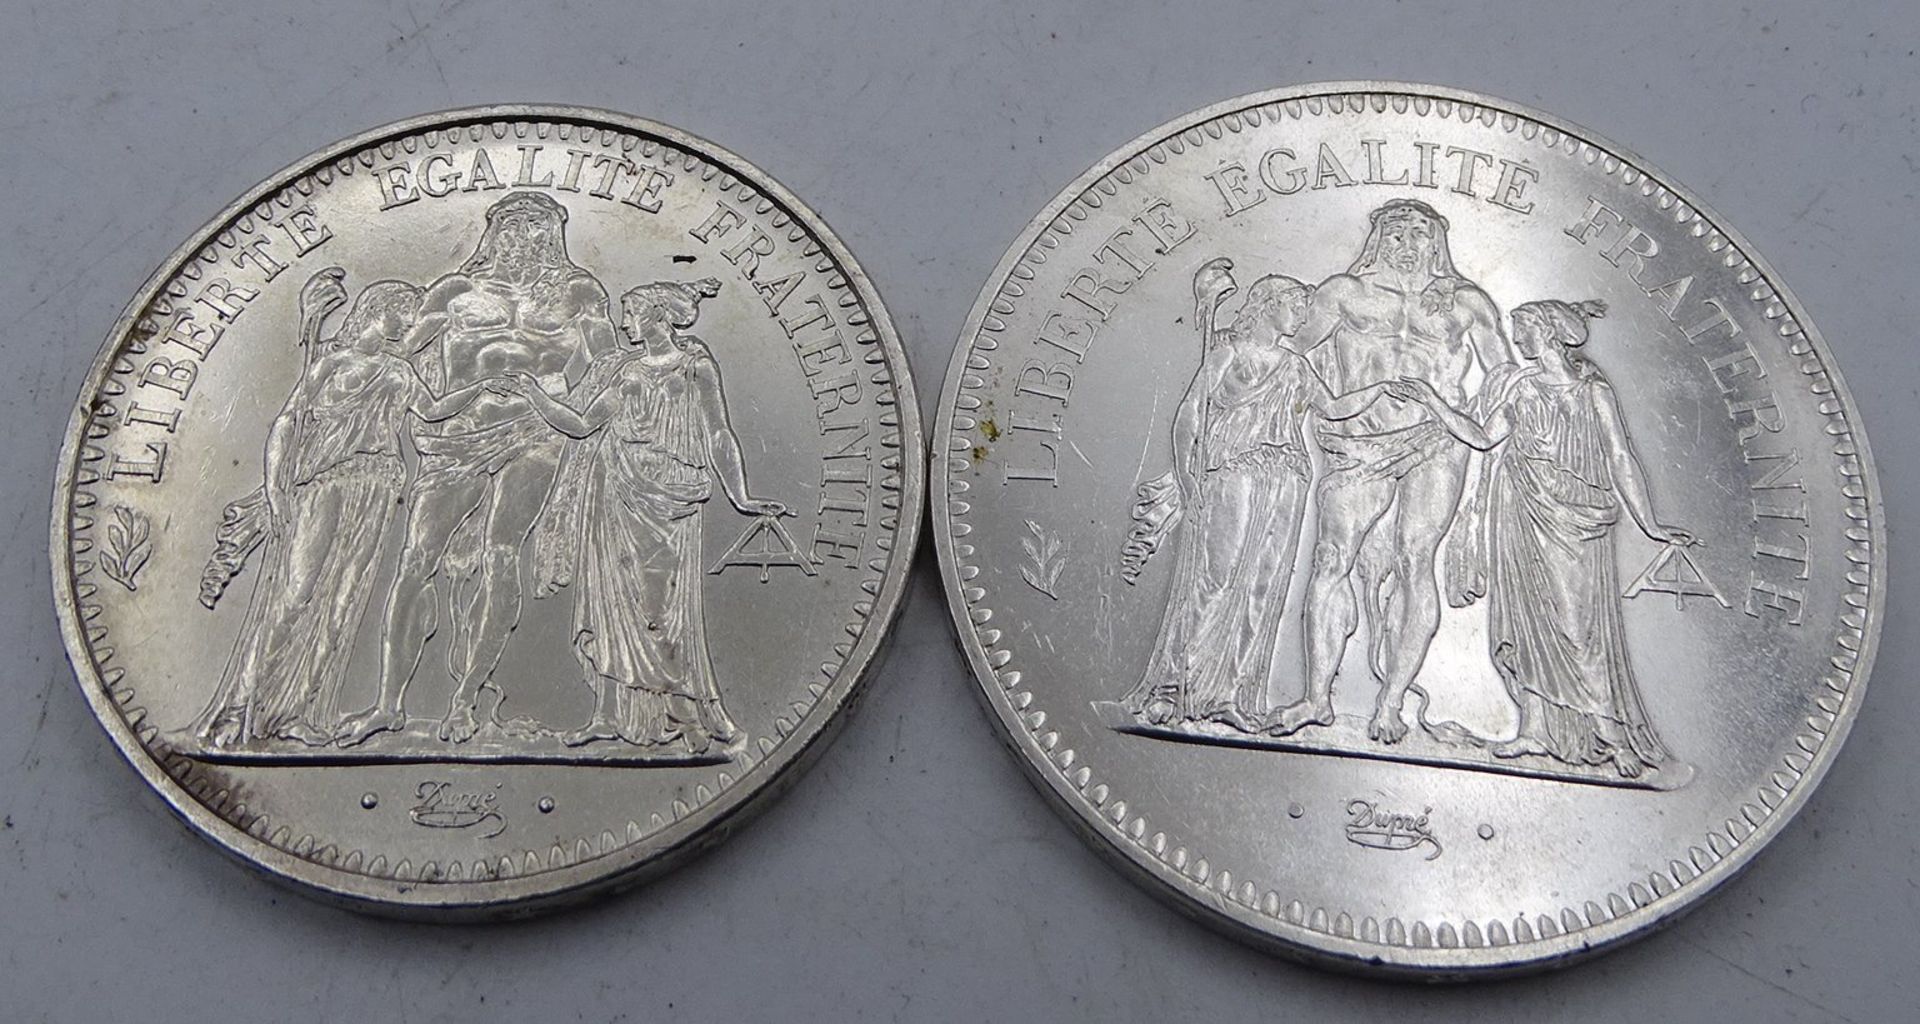 2x Silber-Münzen, Frankreich, 50 Franc 1974, 10 Franc 1965, zus. 54,7 gr.